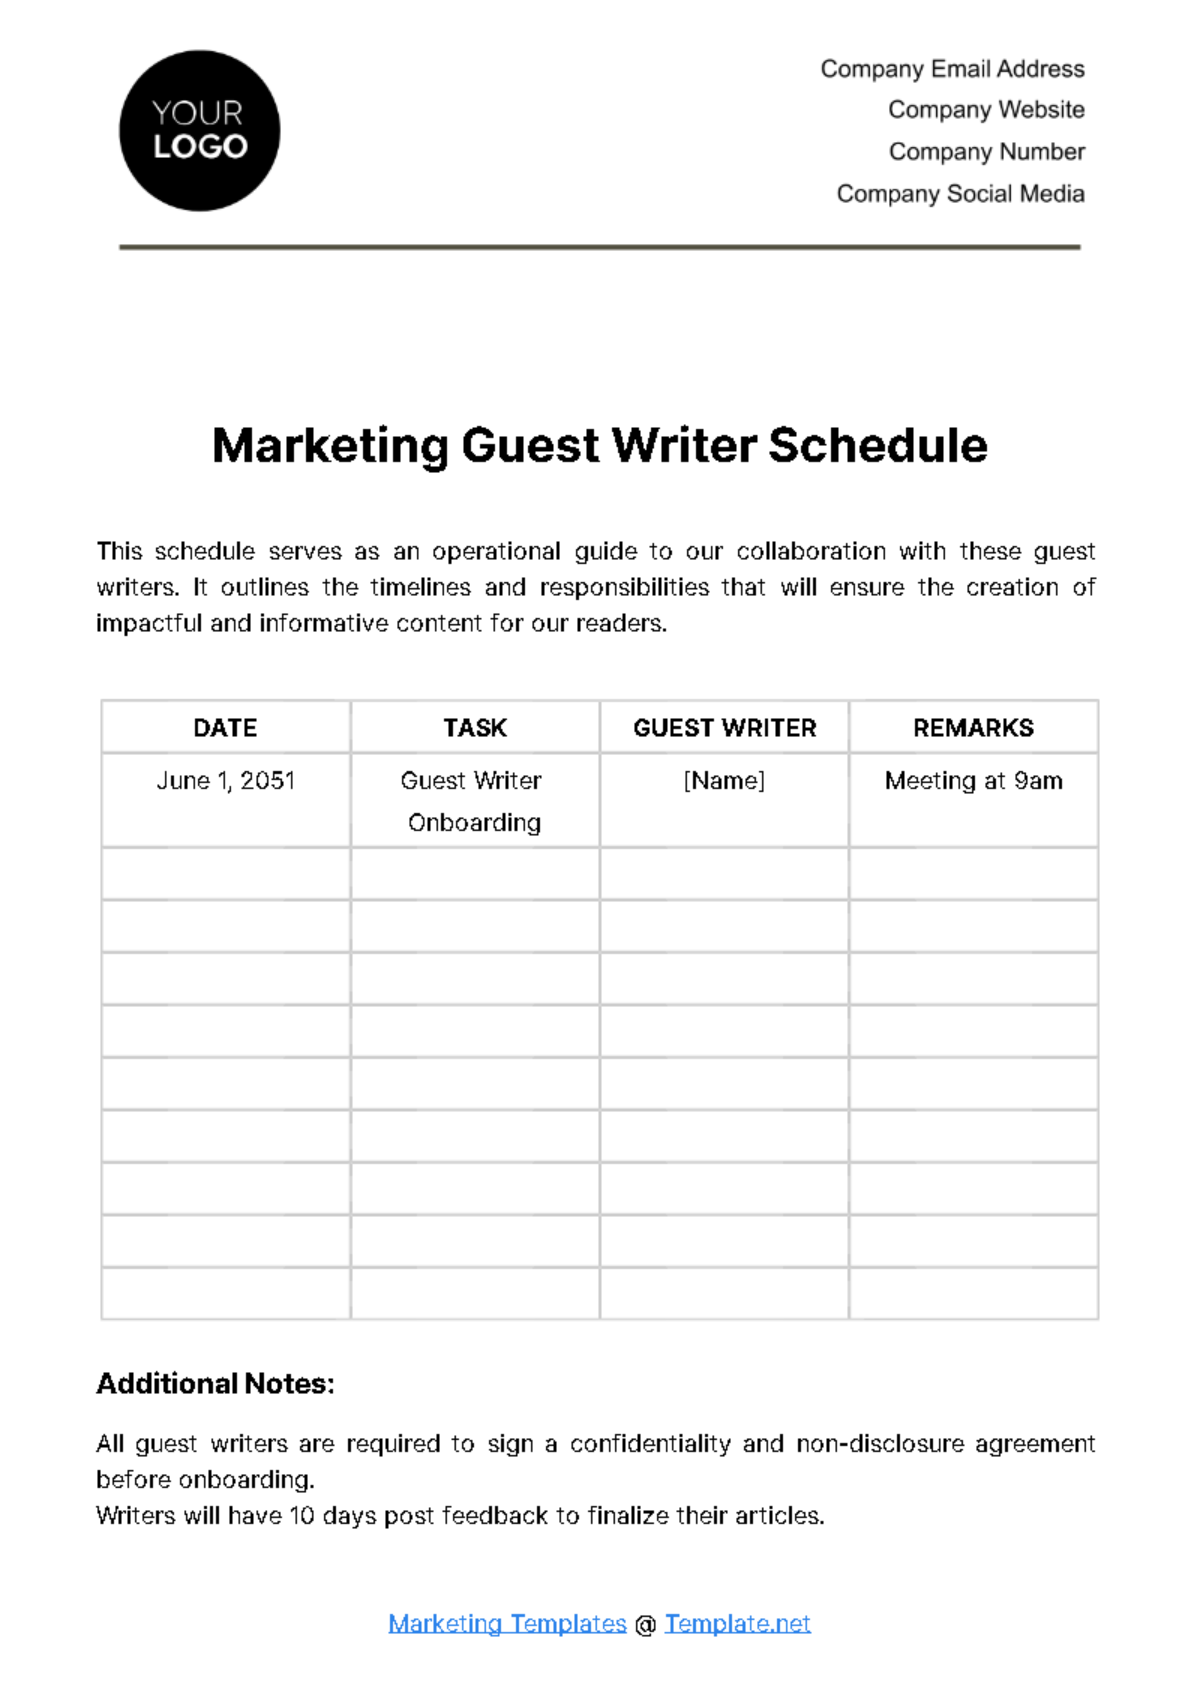 Free Marketing Guest Writer Schedule Template